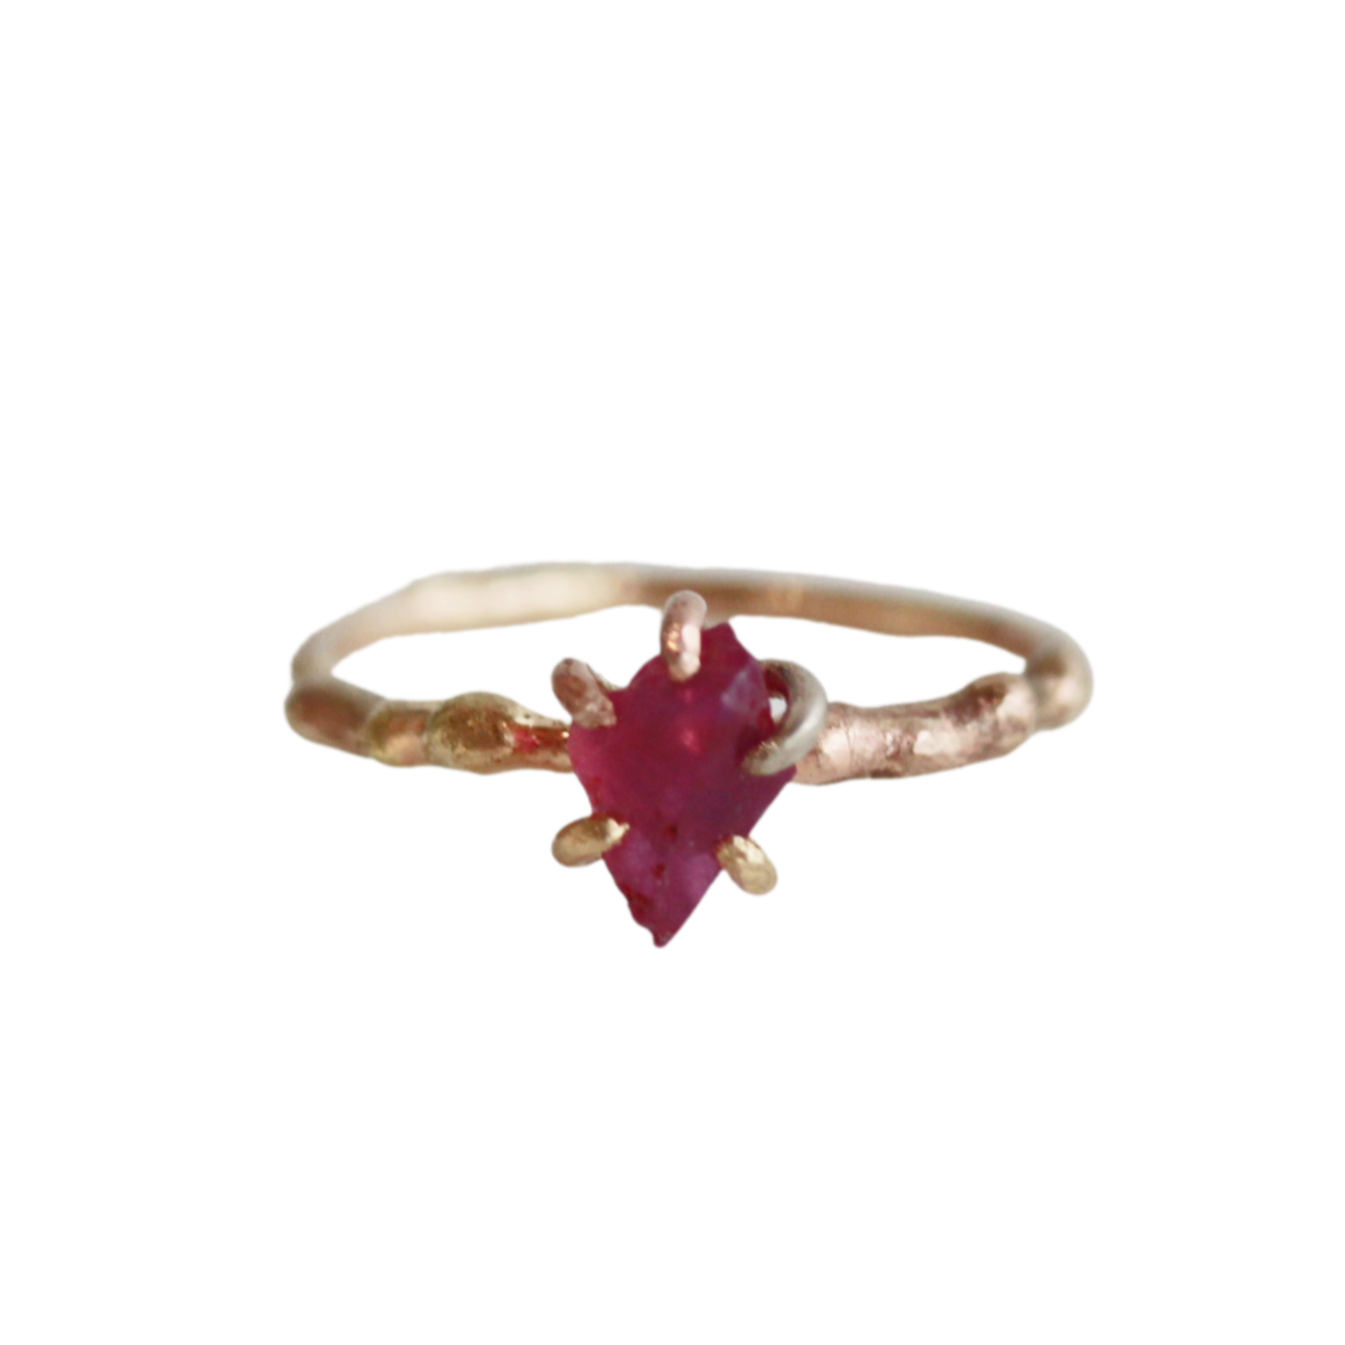 Small Ruby Gemstone Ring